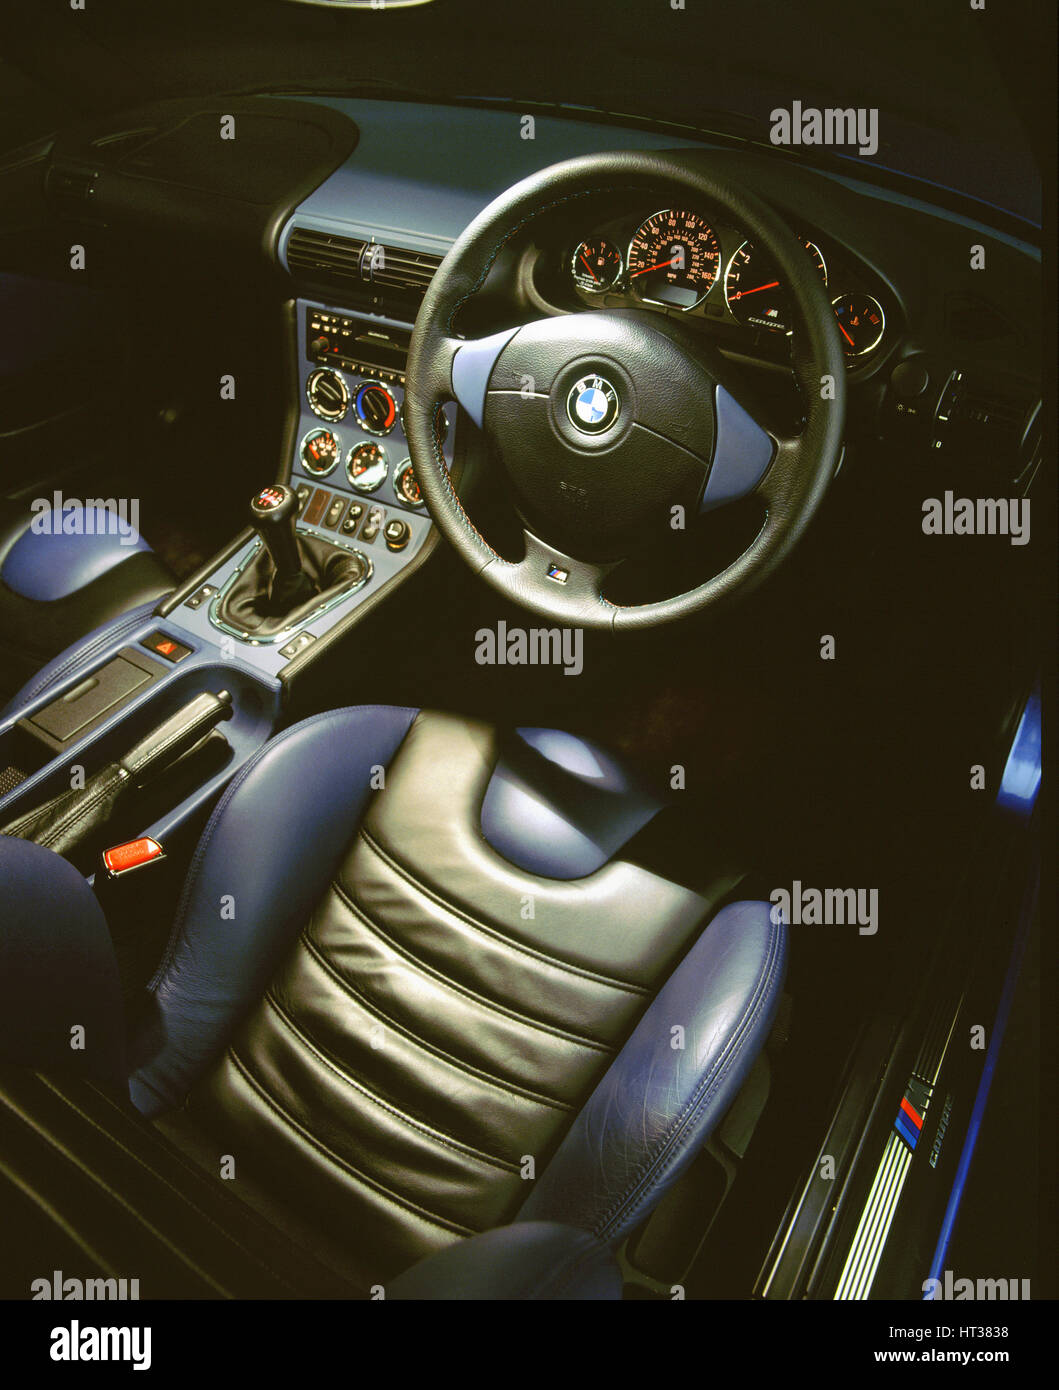 1999 BMW Z3 M coupe. Artist: Unknown. Stock Photo